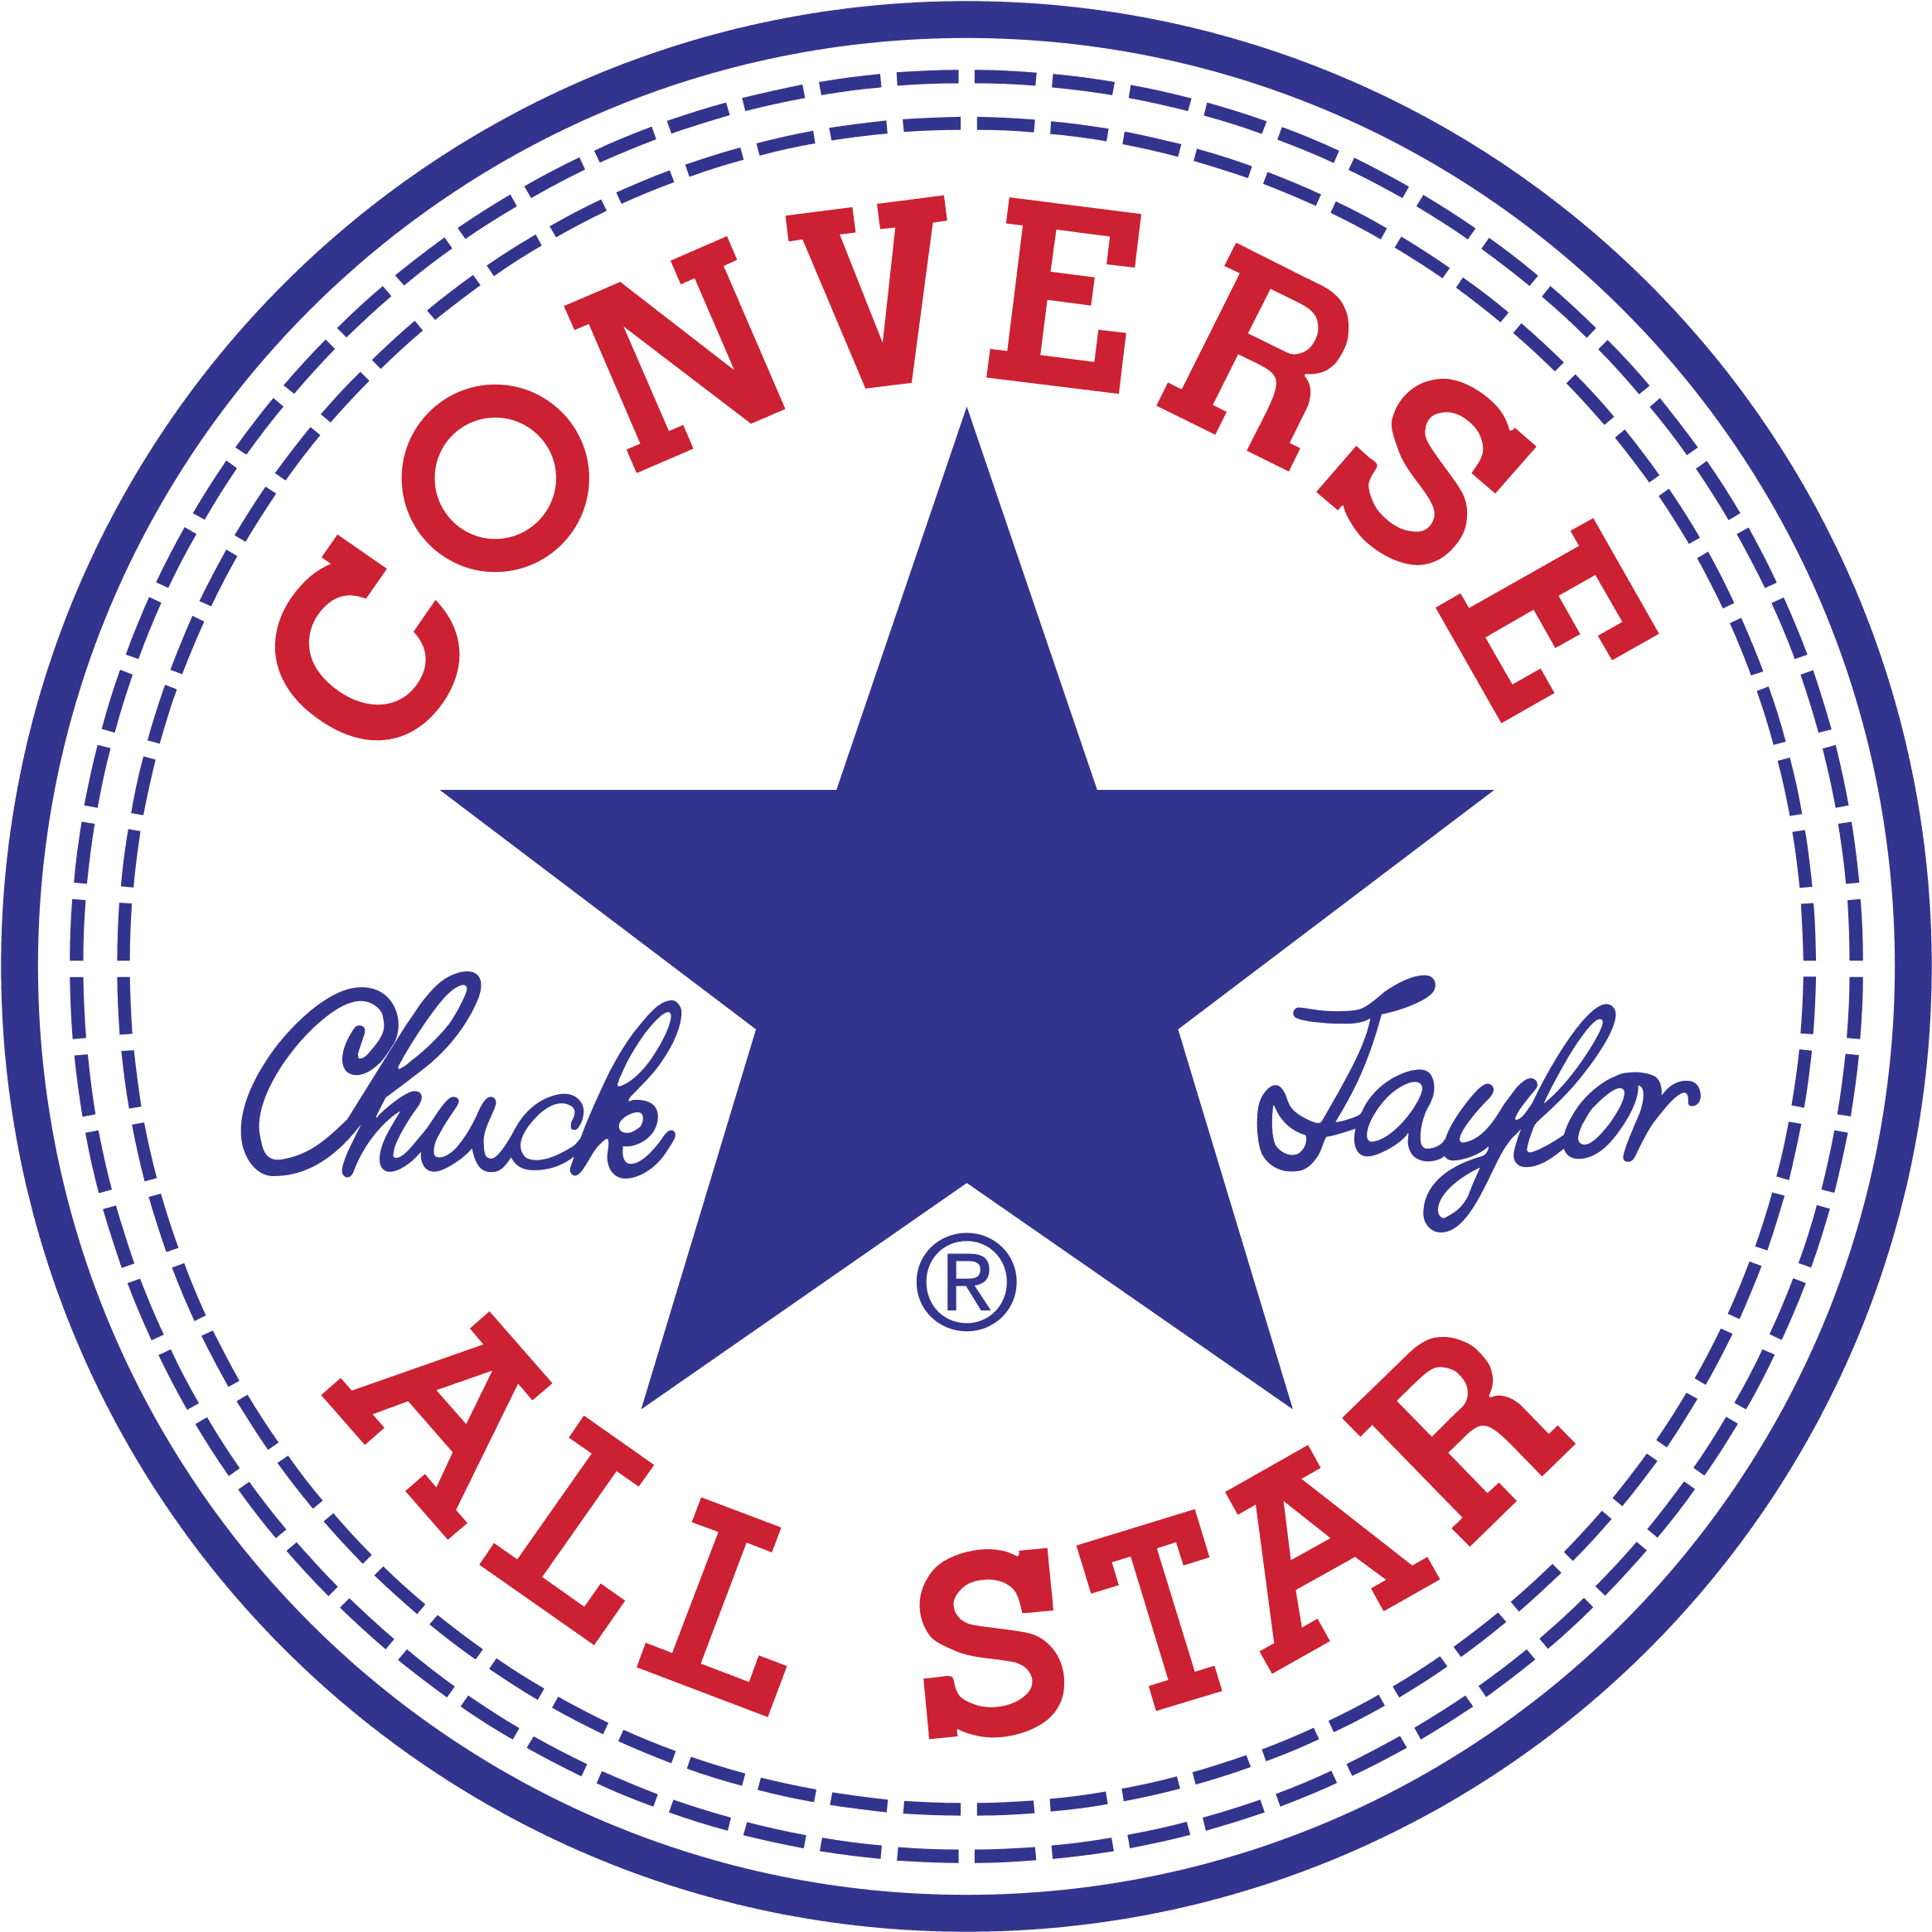 Chuck Taylor All Star logo PNG1